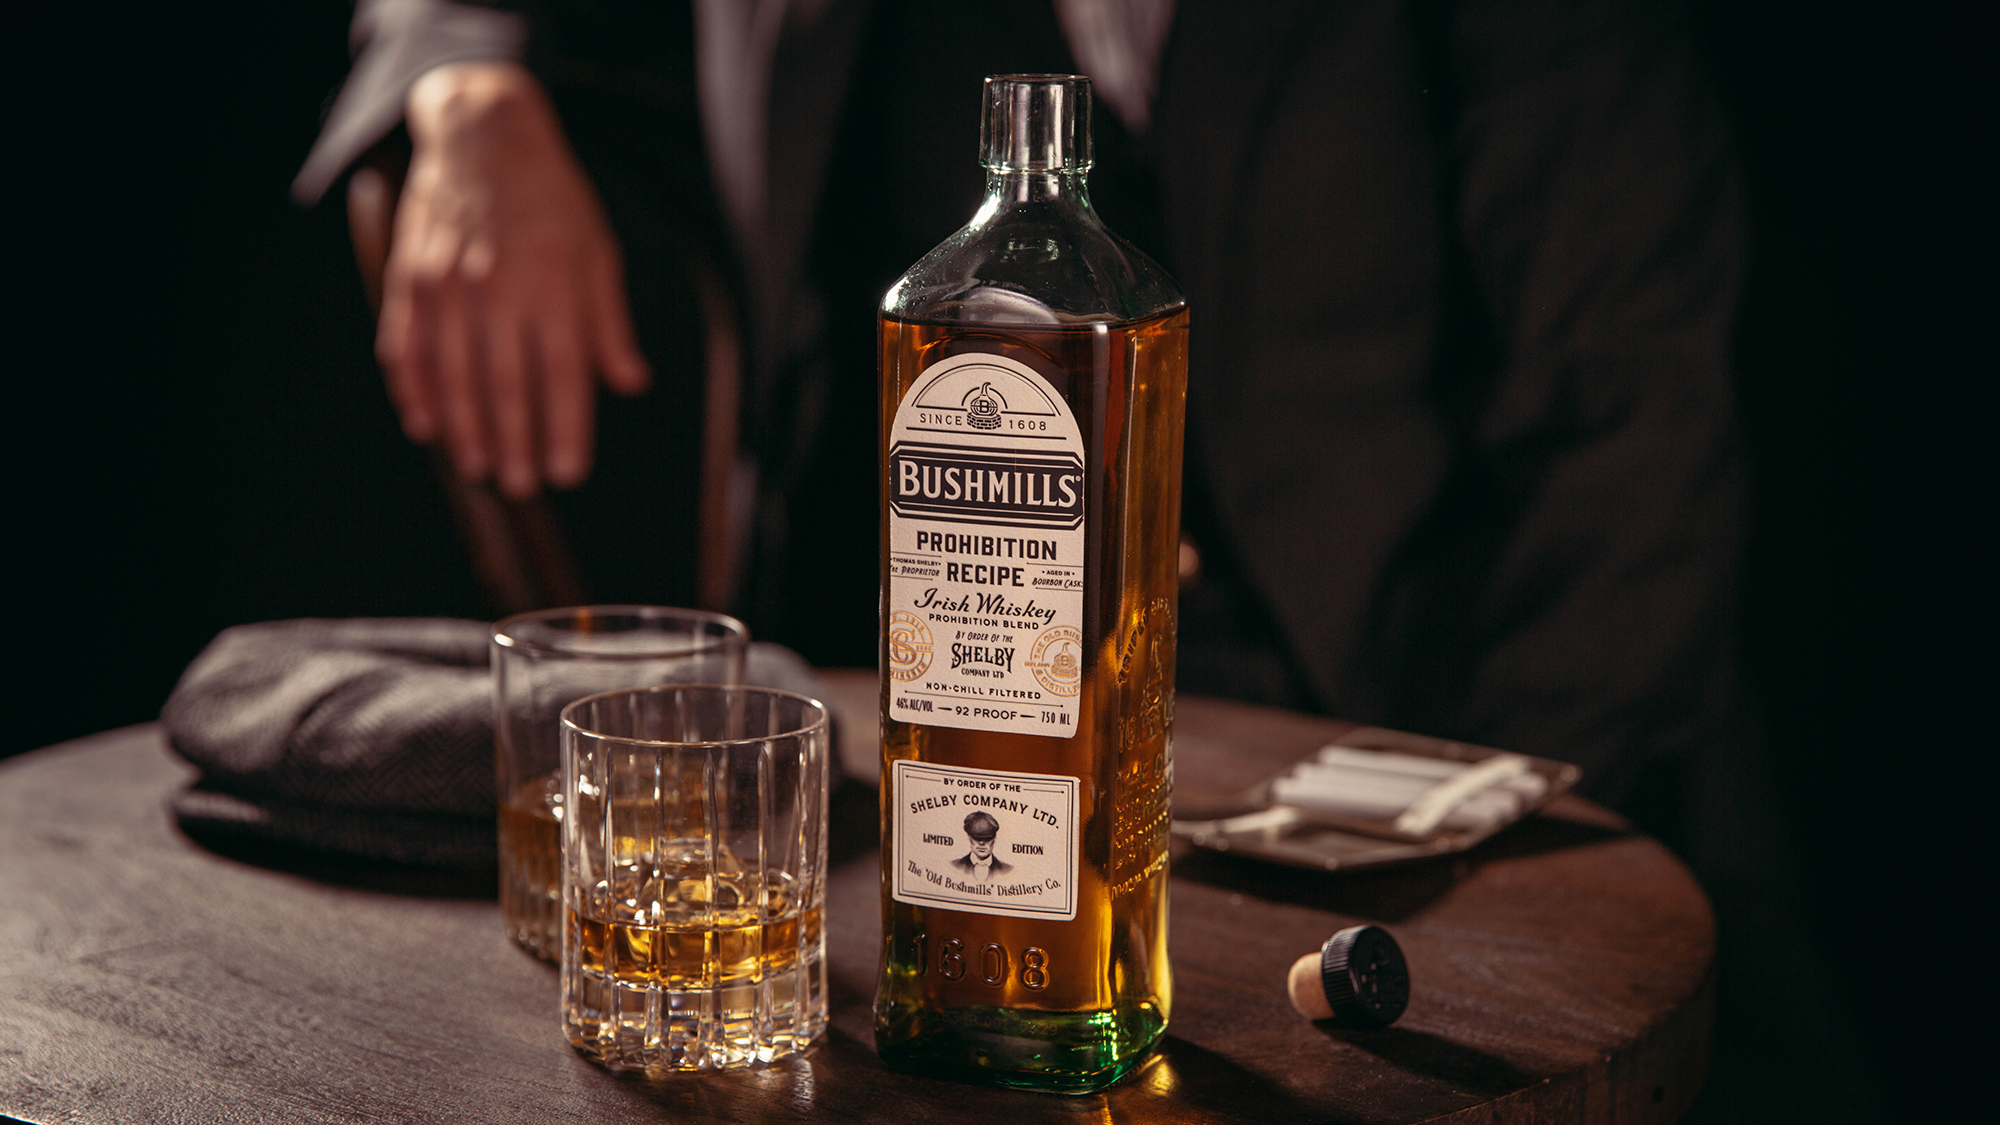 Bushmills Prohibition Recipe Irish Whiskey - Peaky Blinders